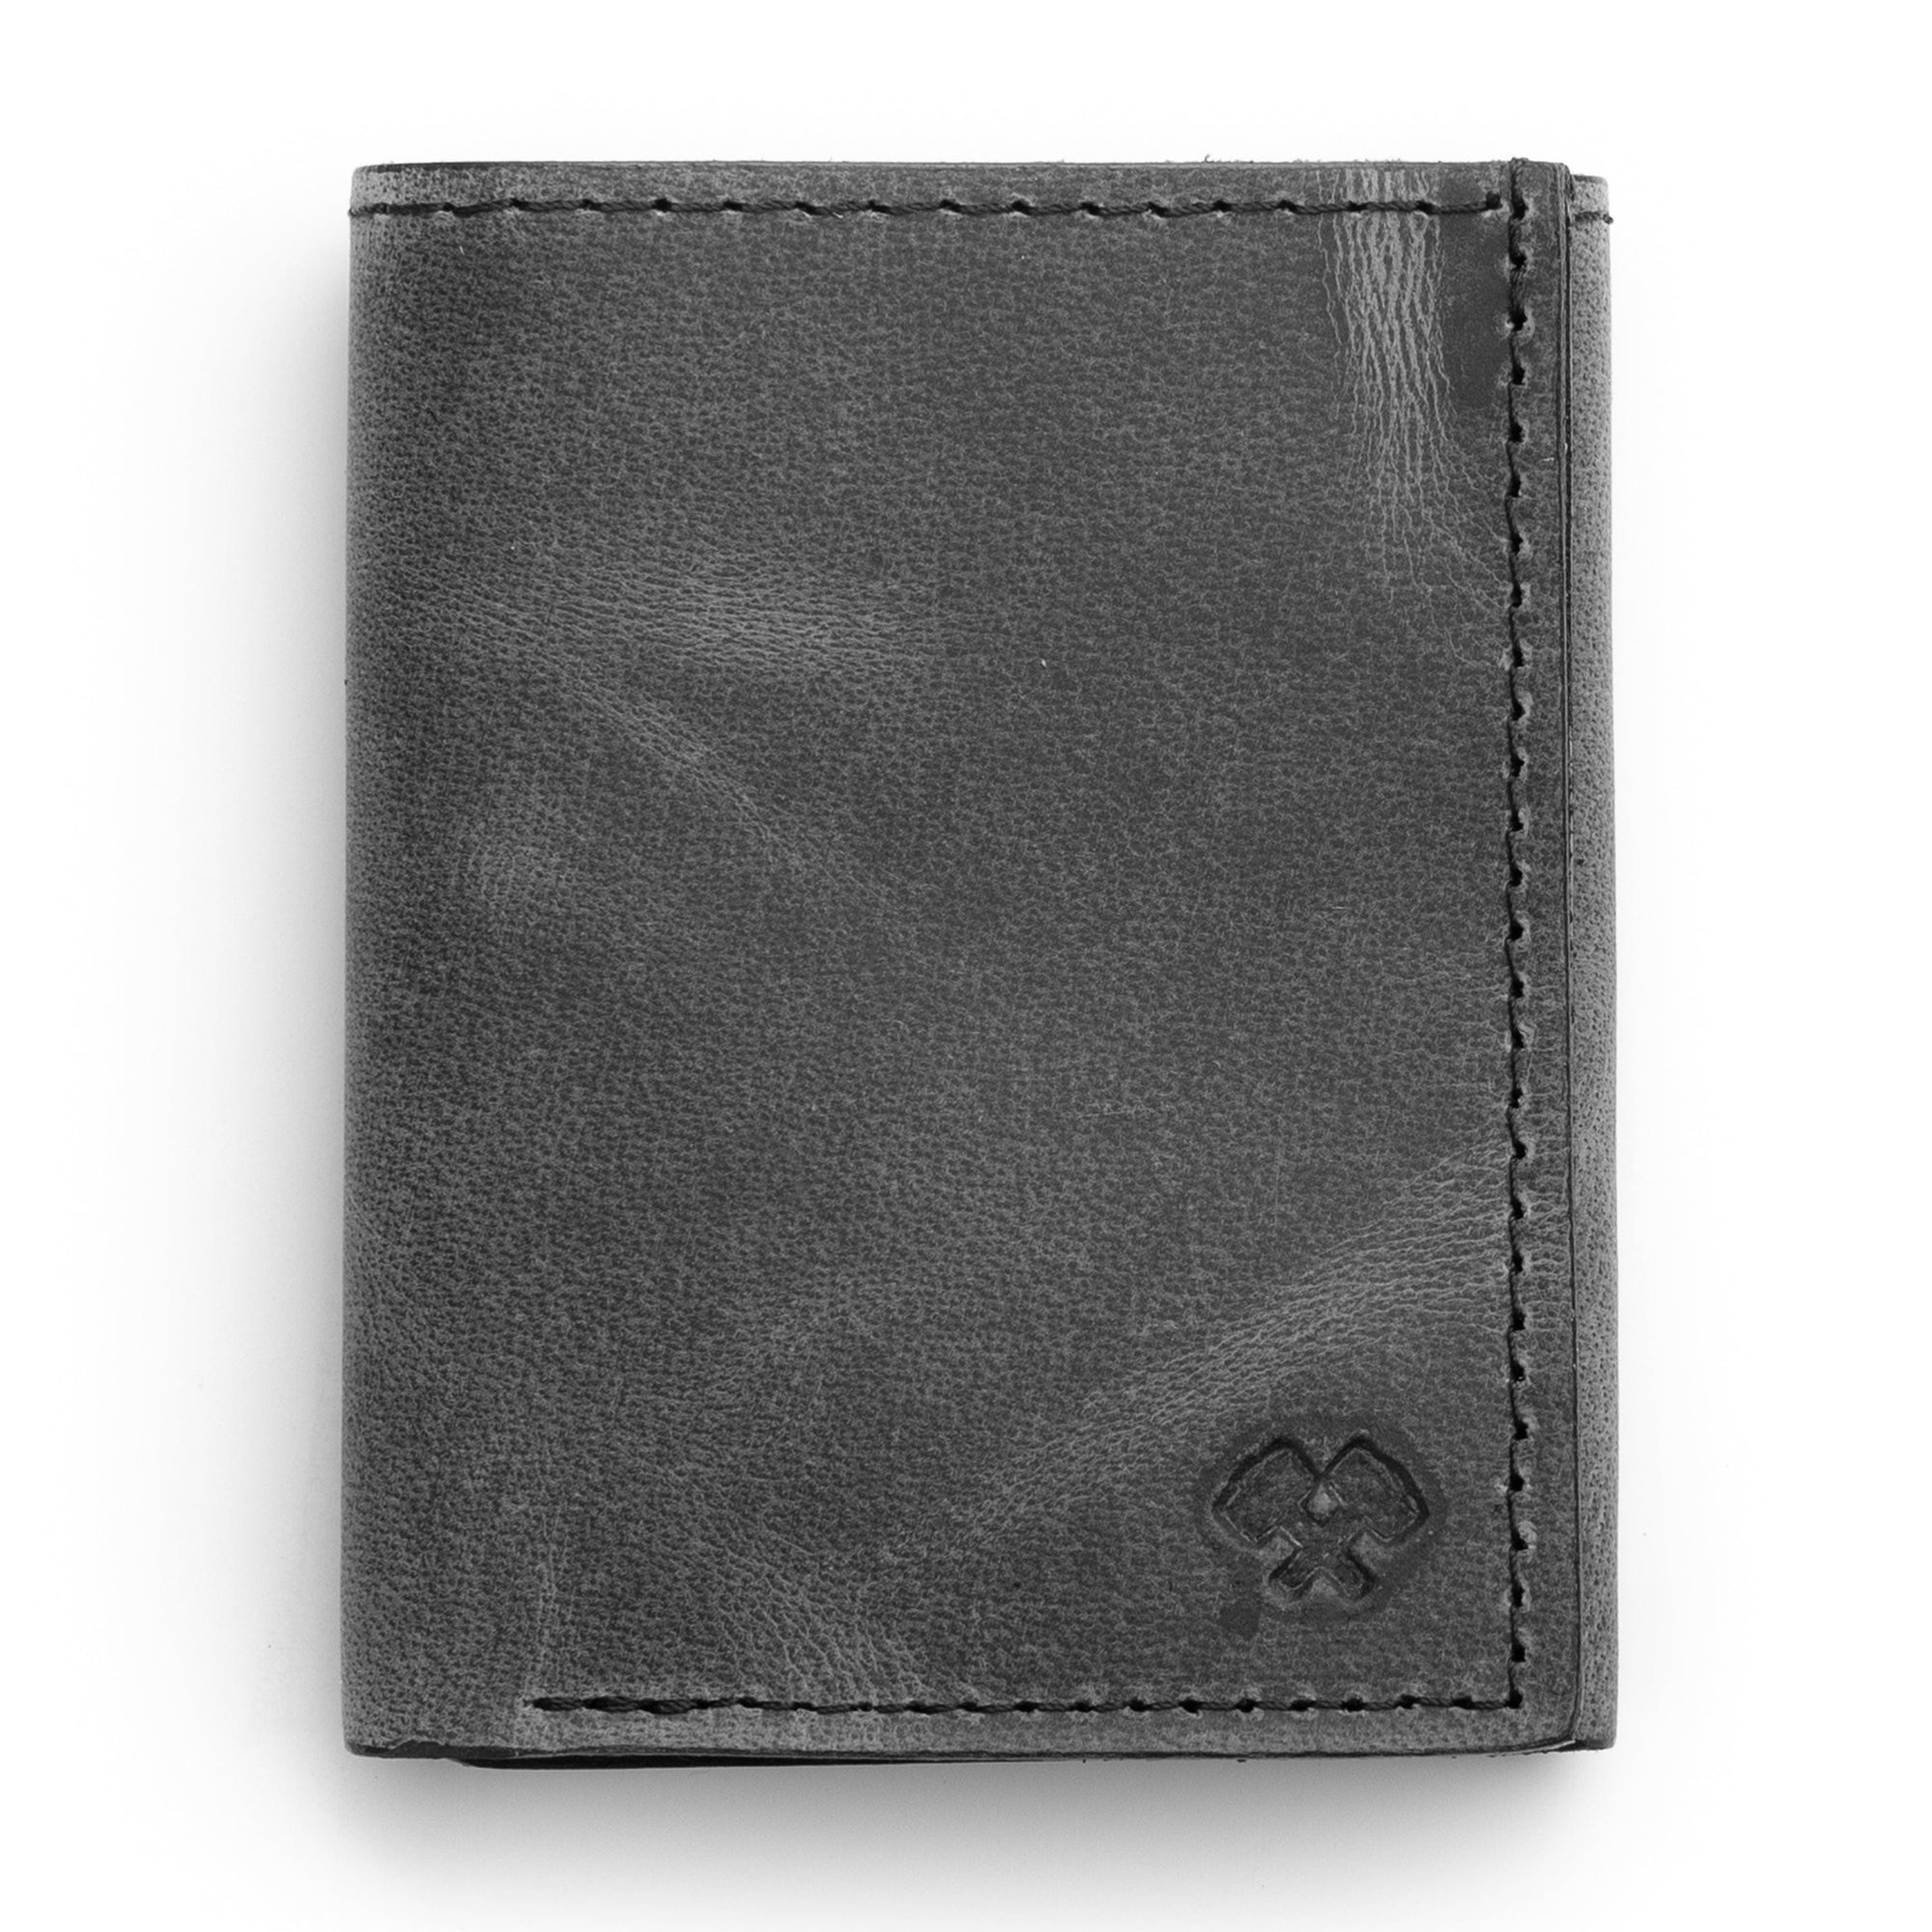 Three-Way- Men's Genuine Cowhide Soft Leather RFID Tri-Fold Wallet